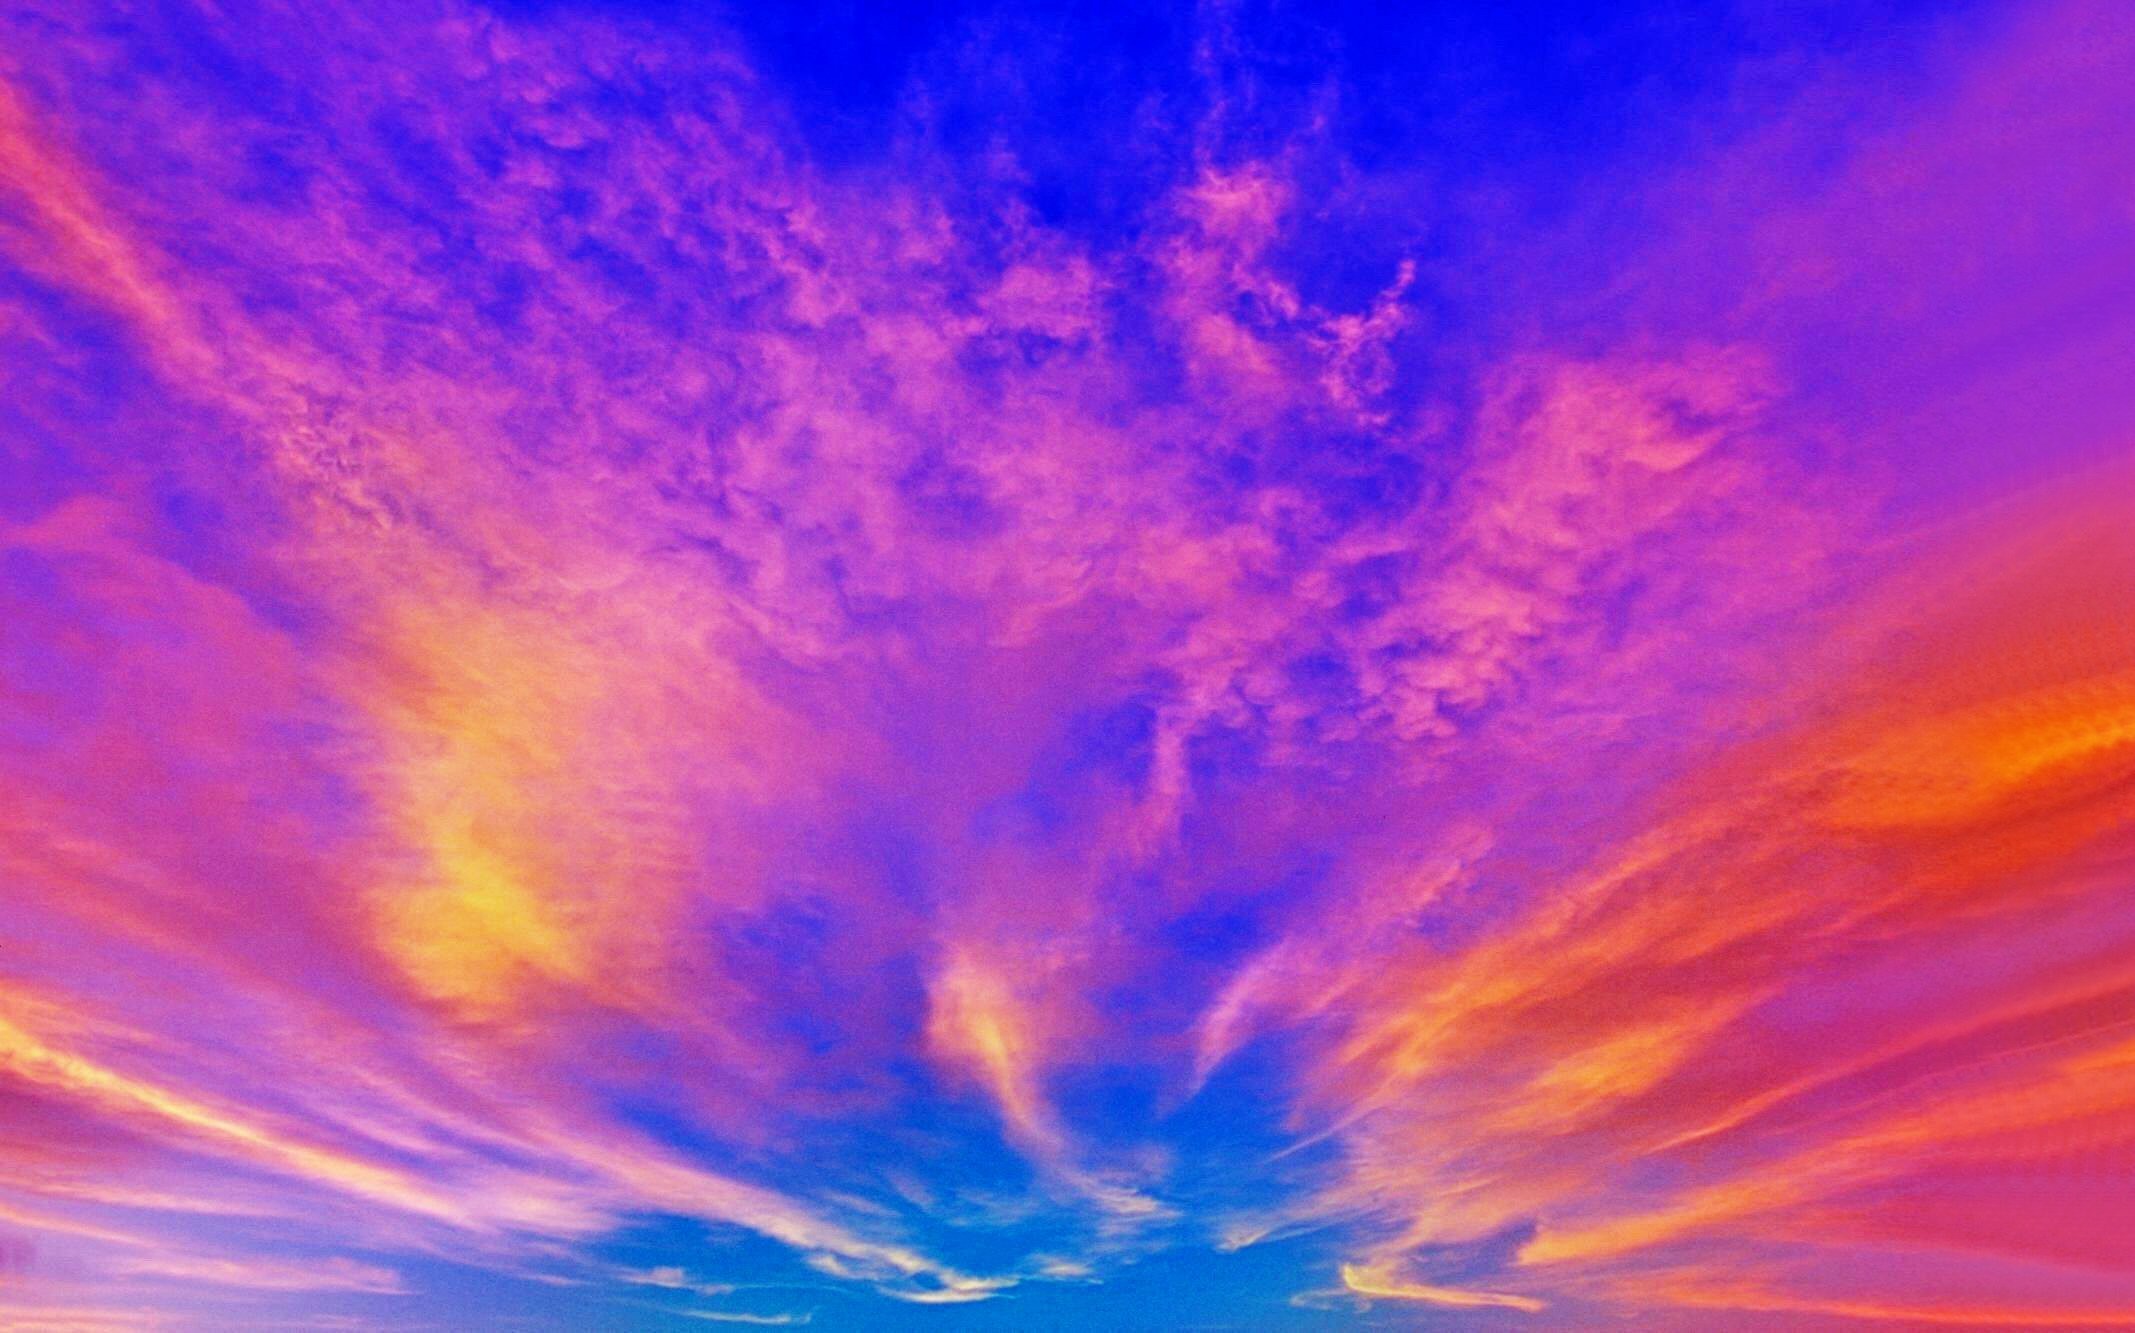 Colorful Sky Wallpaper